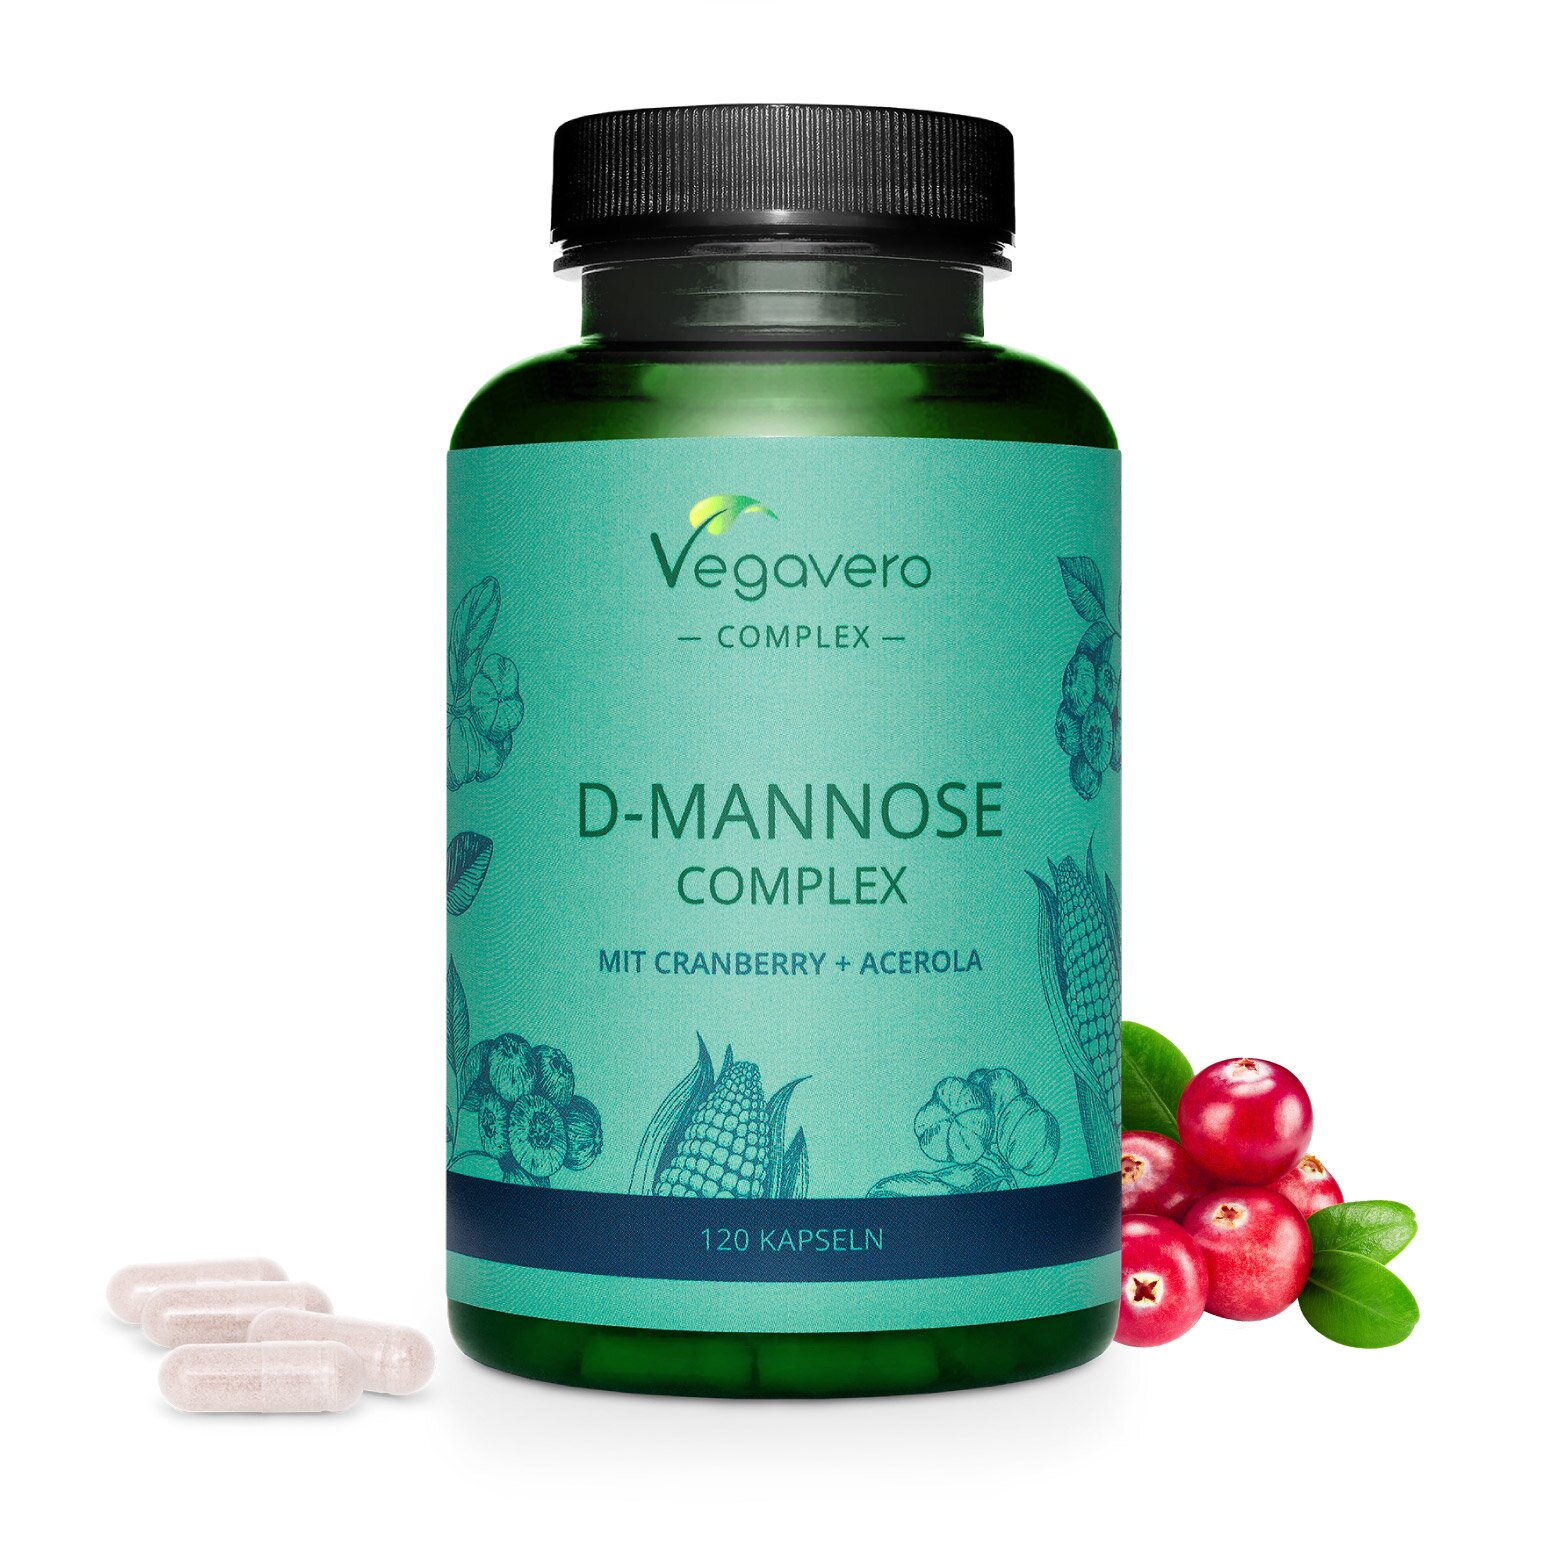 Vegavero D-Mannose Complex | 120 Kapseln | Cranberry + Vitamin C aus Acerola | vegan